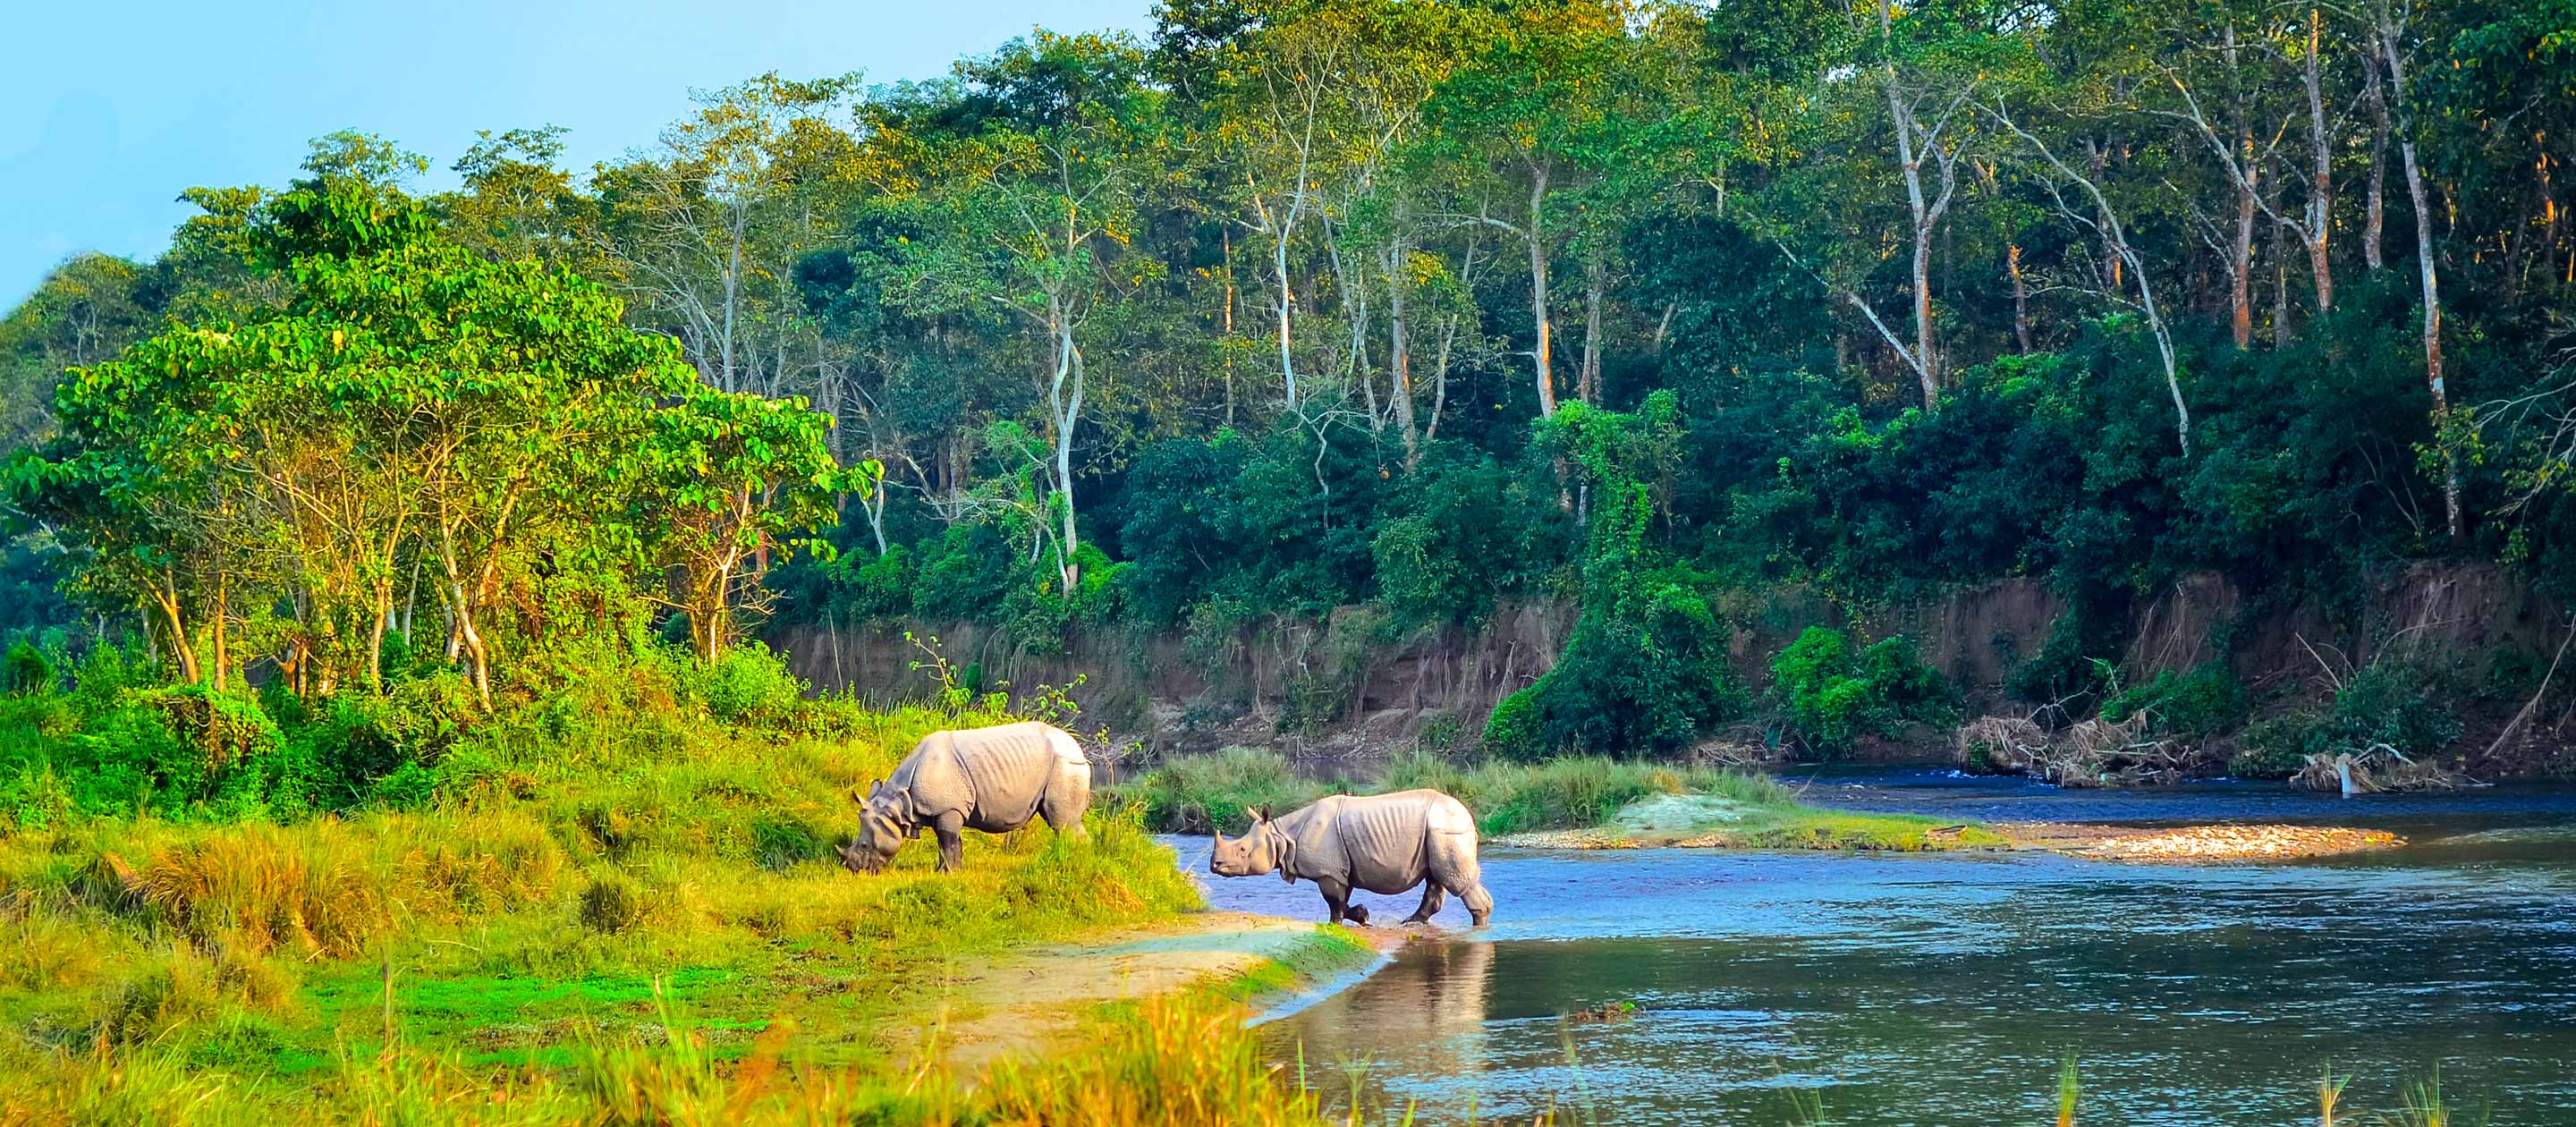 Rhinoceros walk through water in Chitwan National Park, Nepal